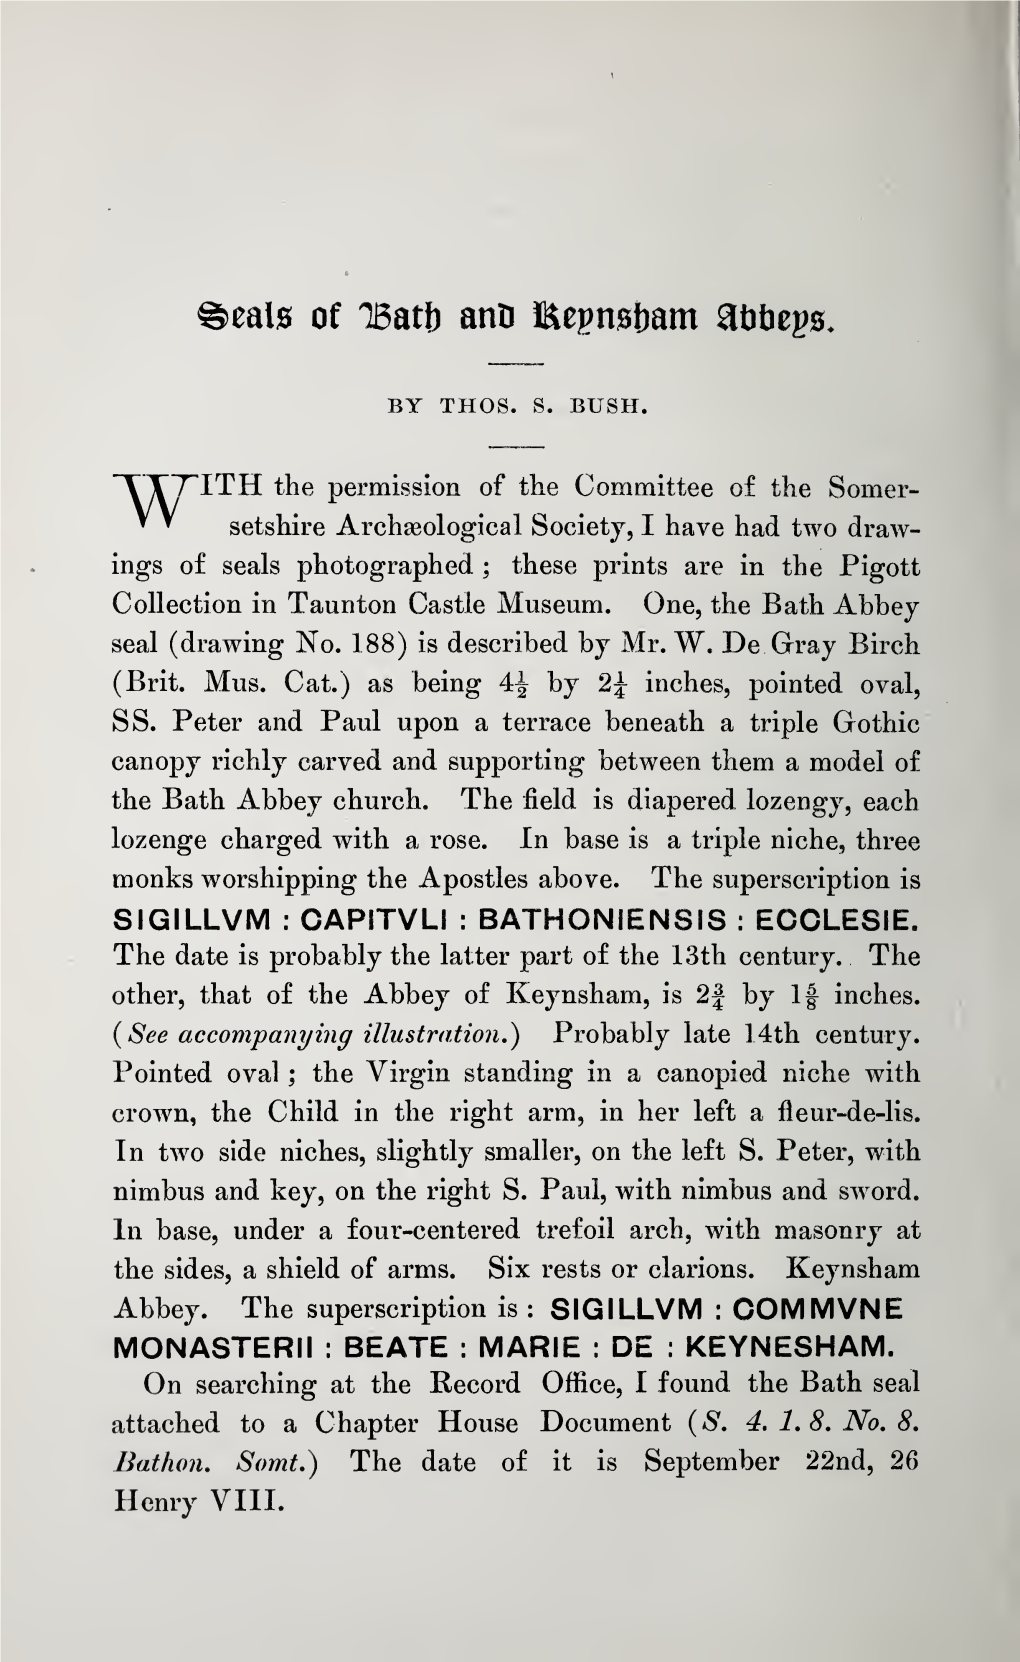 Bush, T S, Seals of Bath and Keynsham Abbeys, Part II, Volume 51